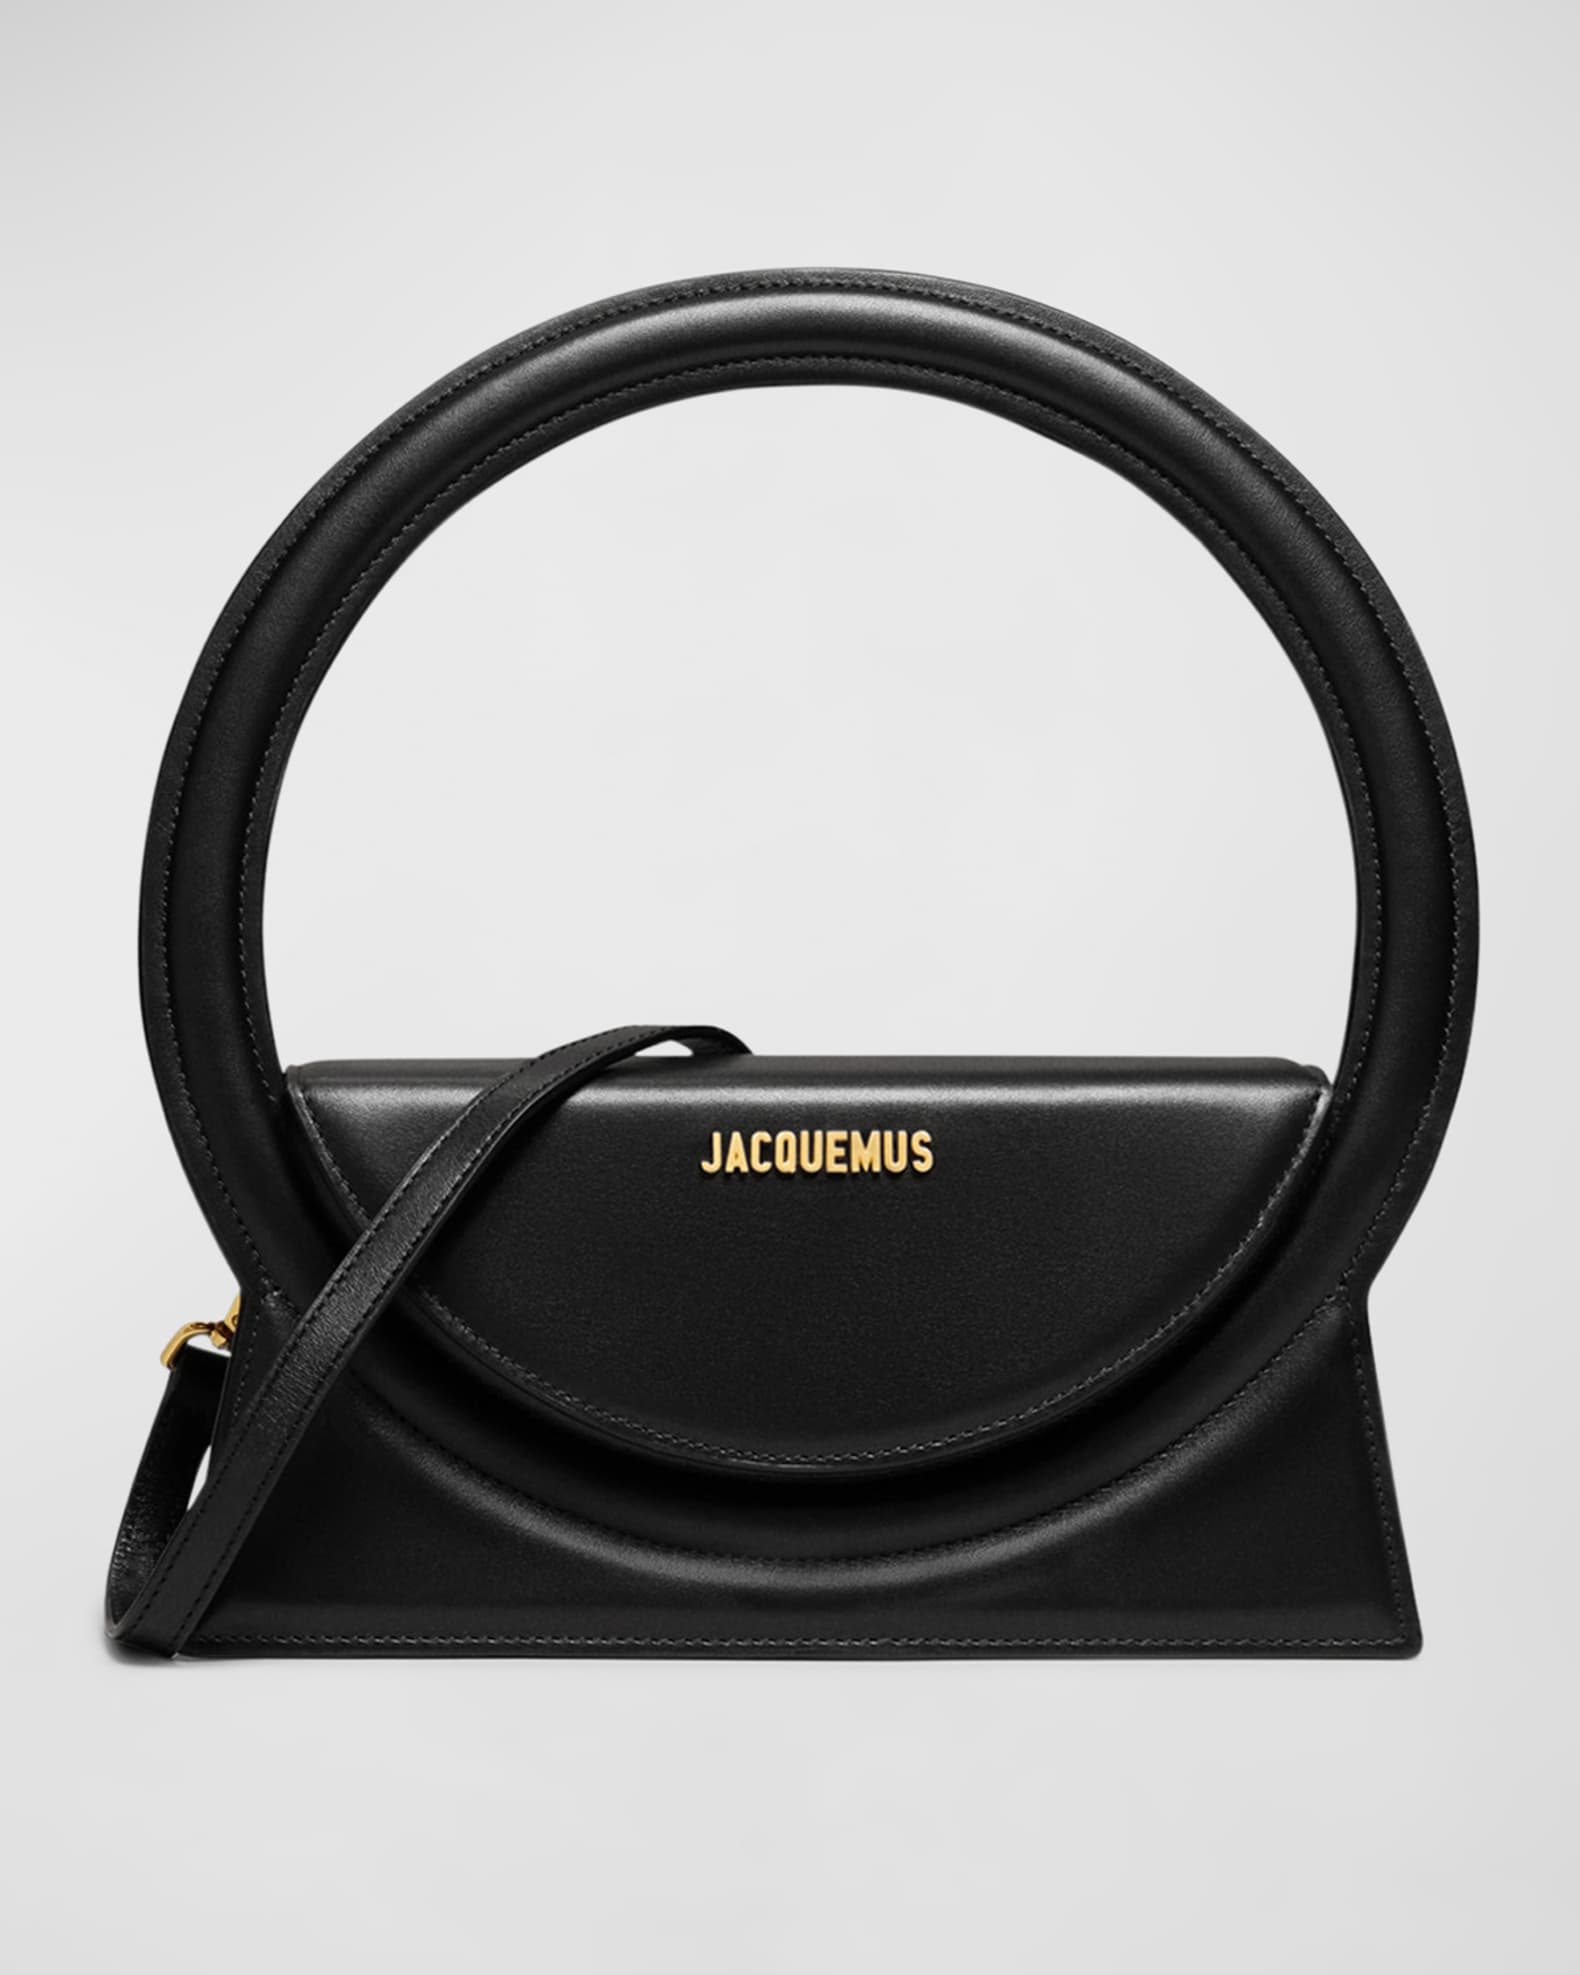 Jacquemus Le Sac Rond Top Handle Bag, Black, Women's, Handbags & Purses Top Handle Bags